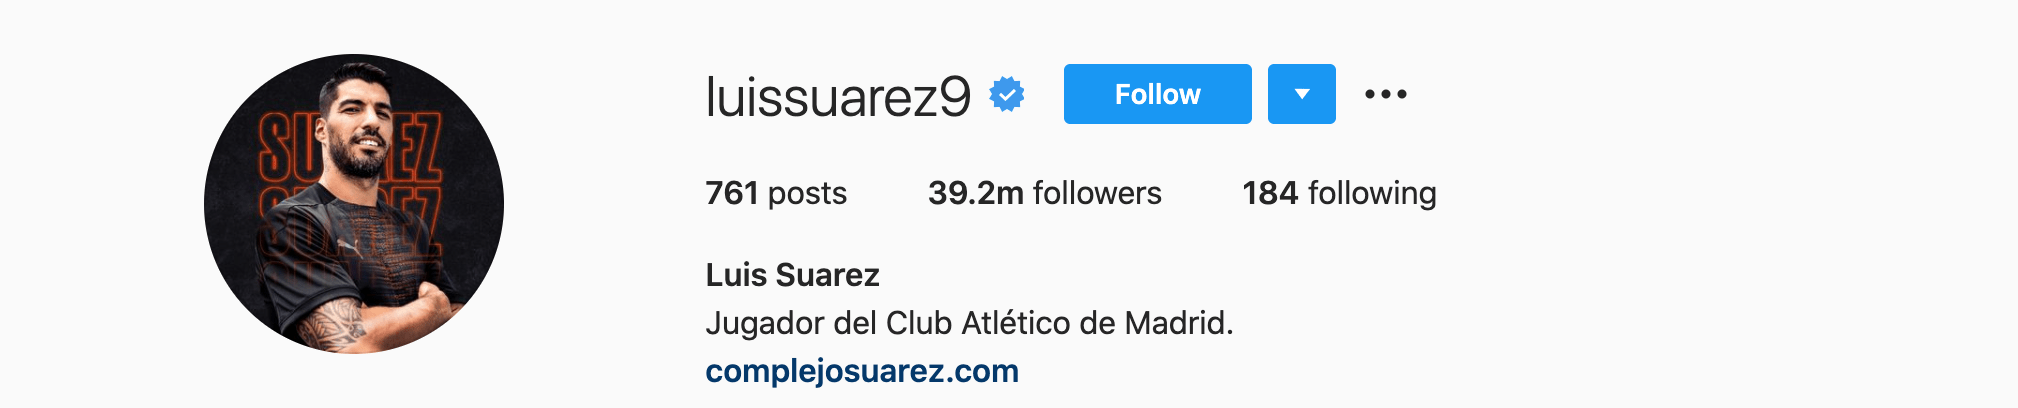 Top Instagram Influencers - LUIS SUAREZ